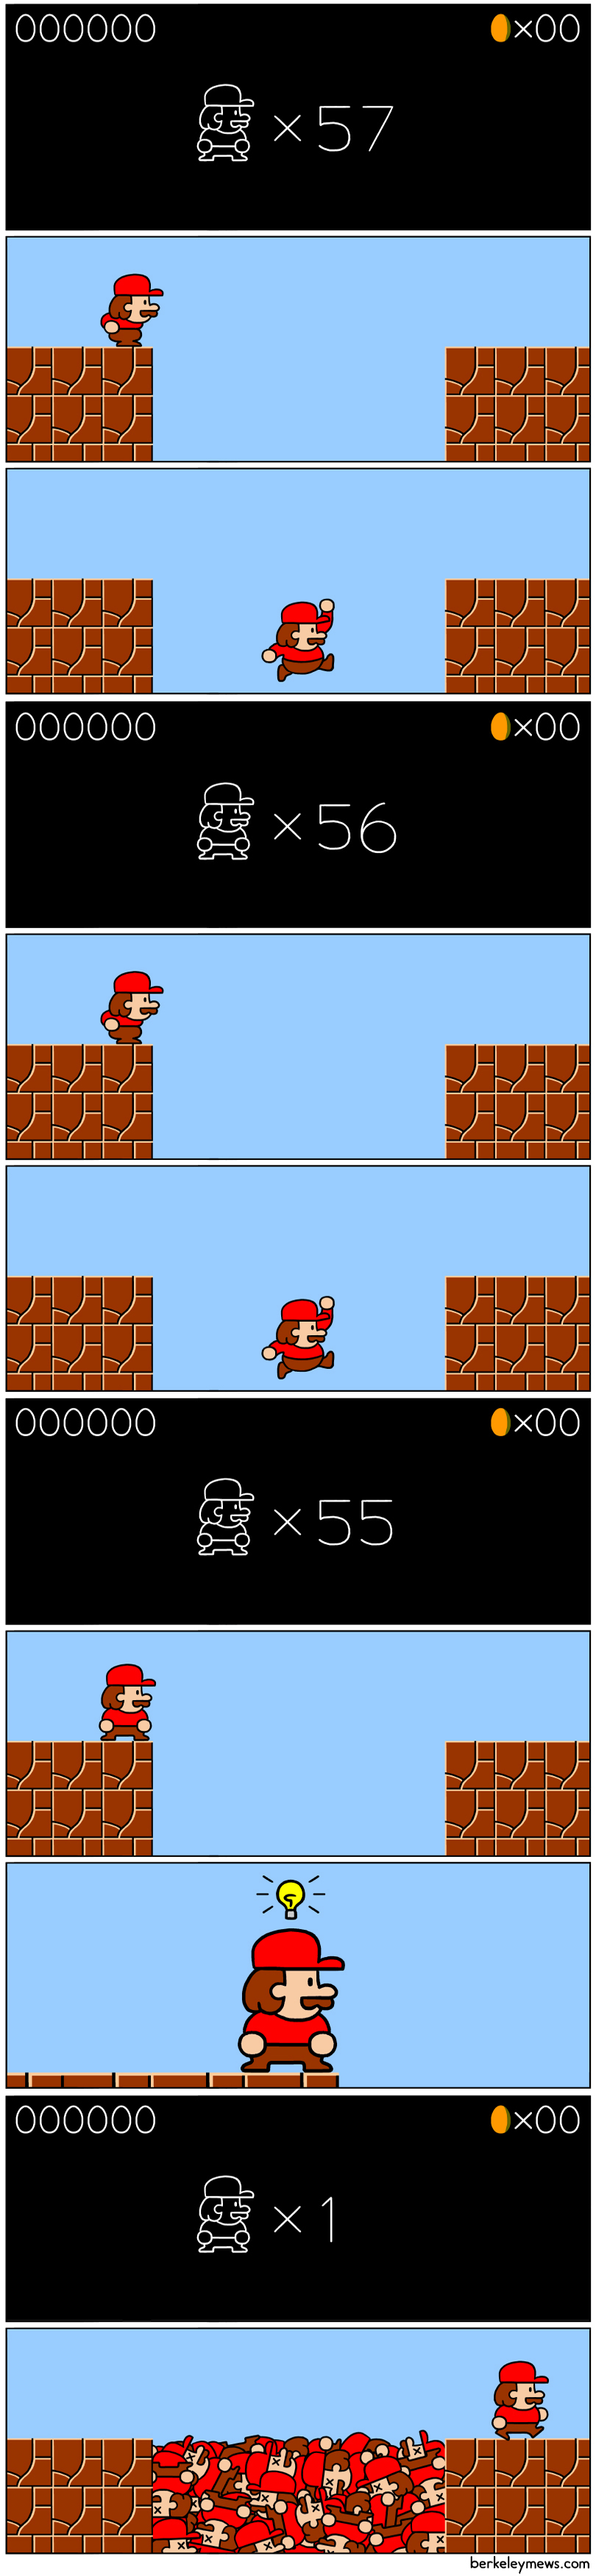 Mario-Bross